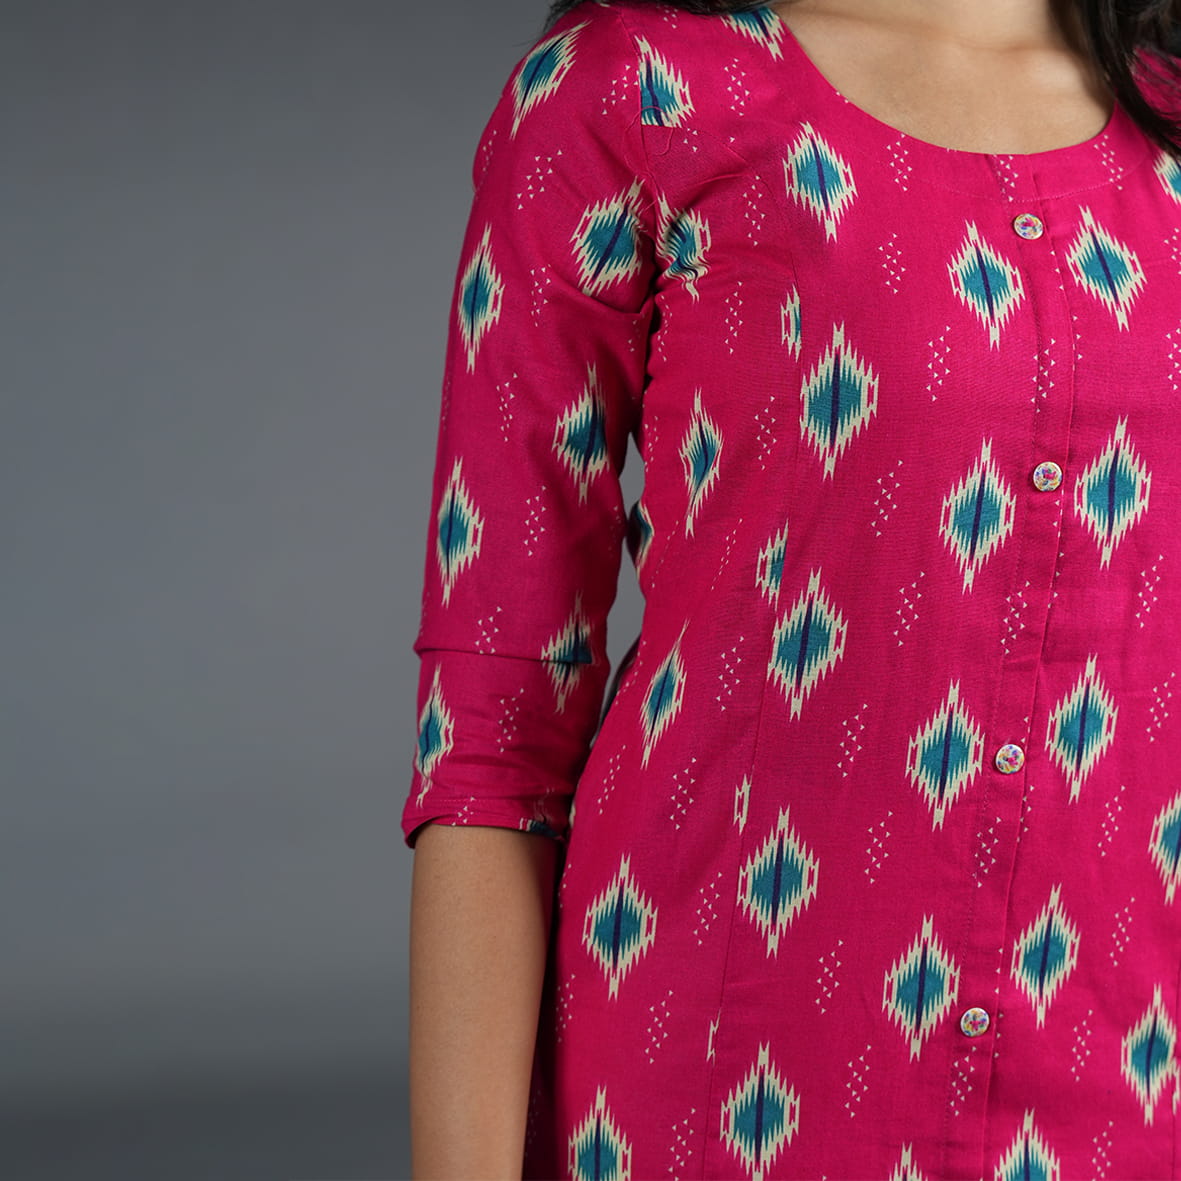 Rani Pink Cotton Ikat Cotton Print| Stunning Princess Cut Round Neck| Kasthuri Kurti for Women